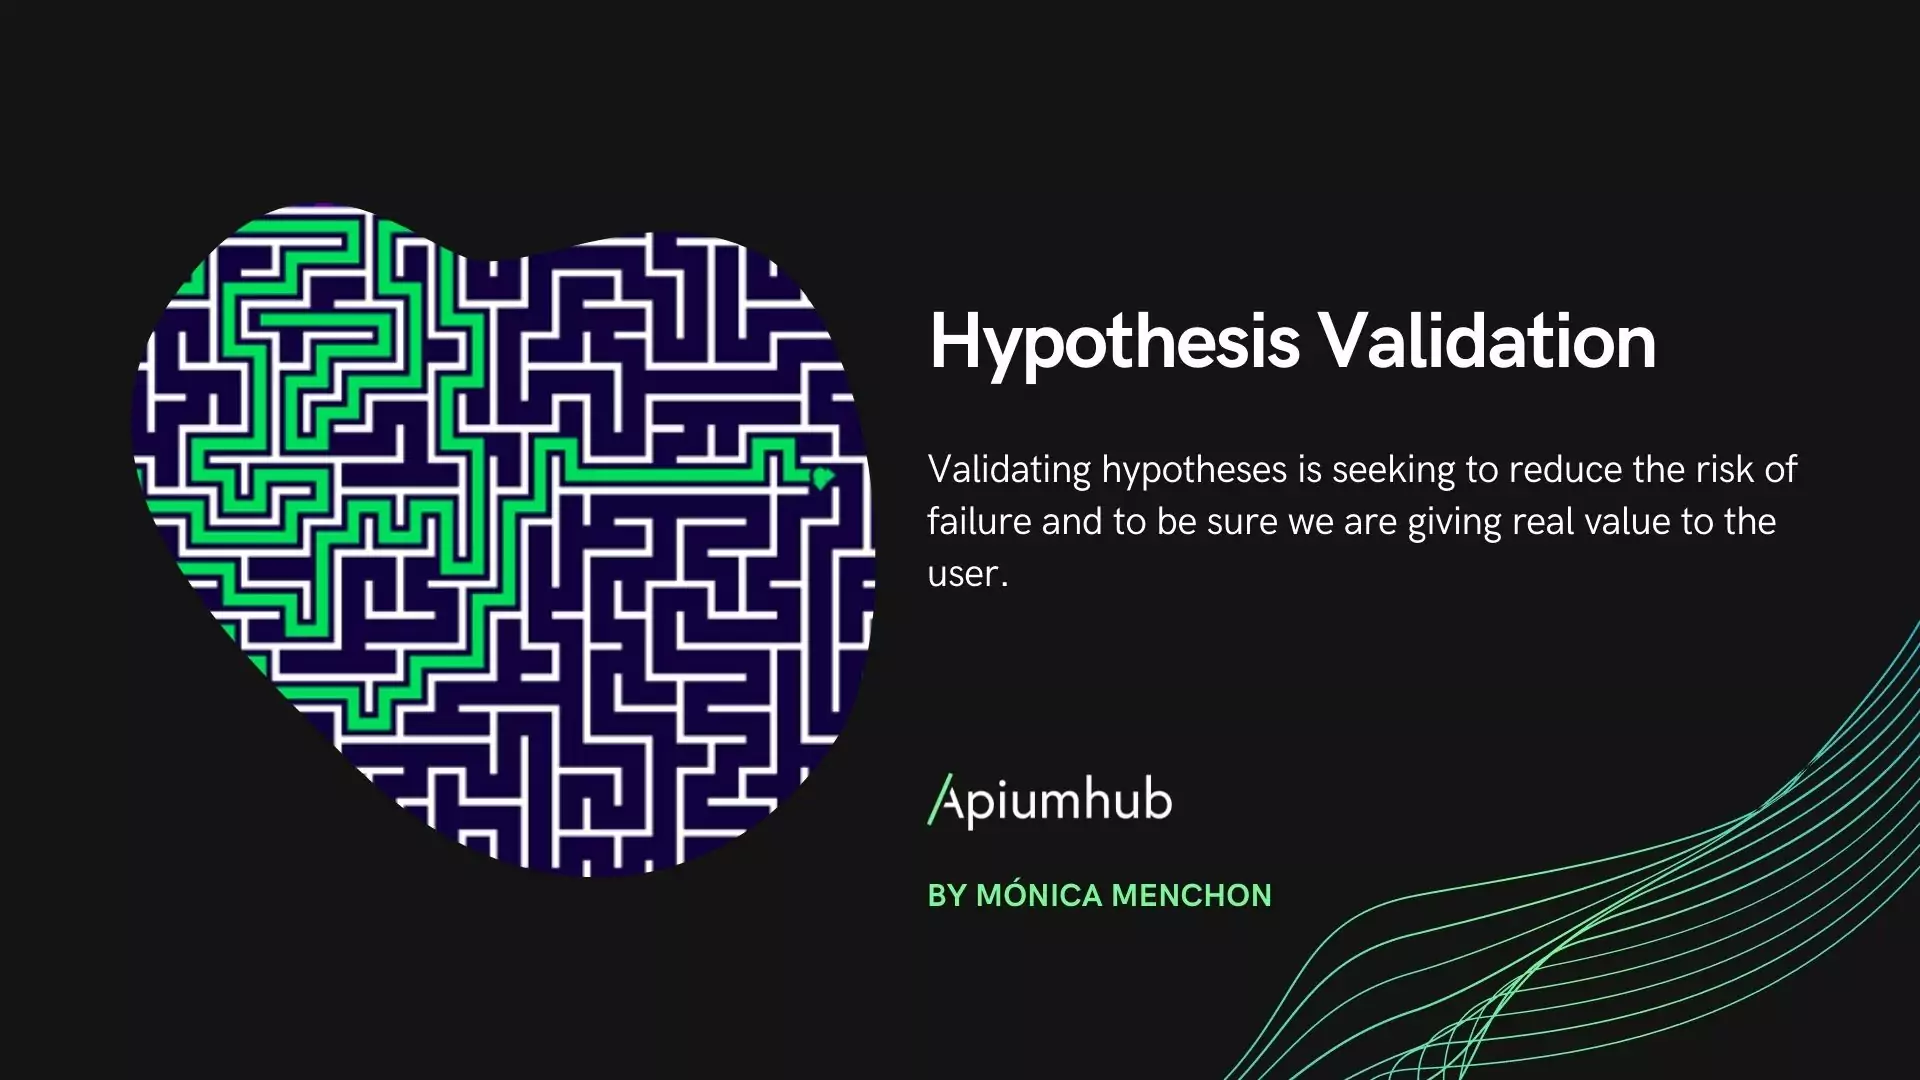 Hypothesis validation